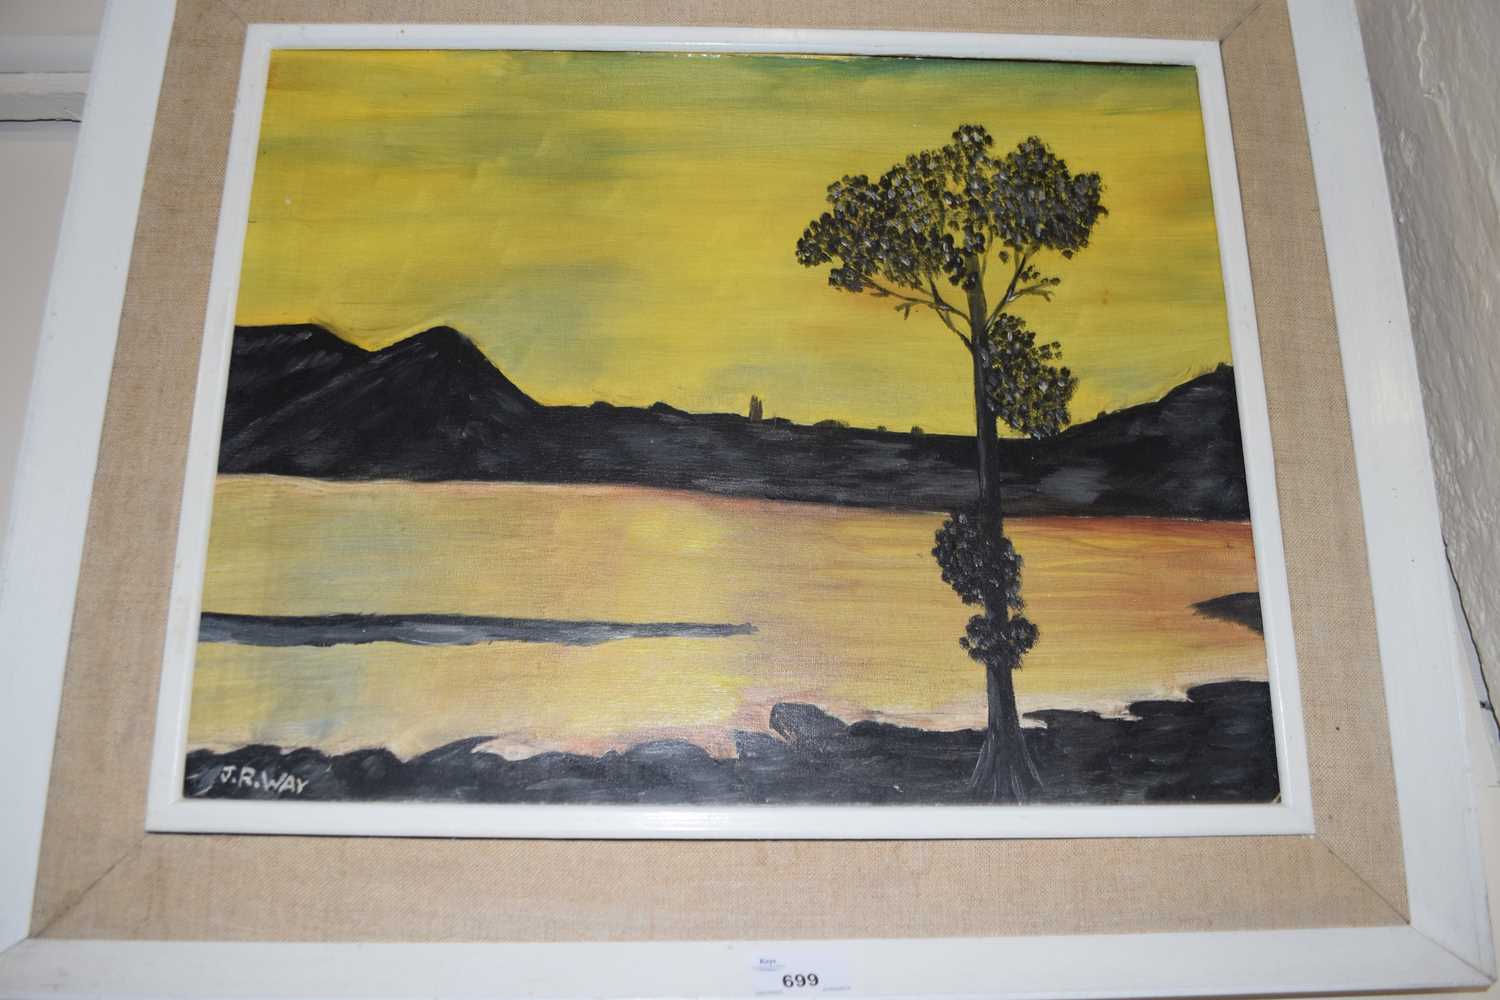 Sunset landscape by J R Way, oil on board, framed